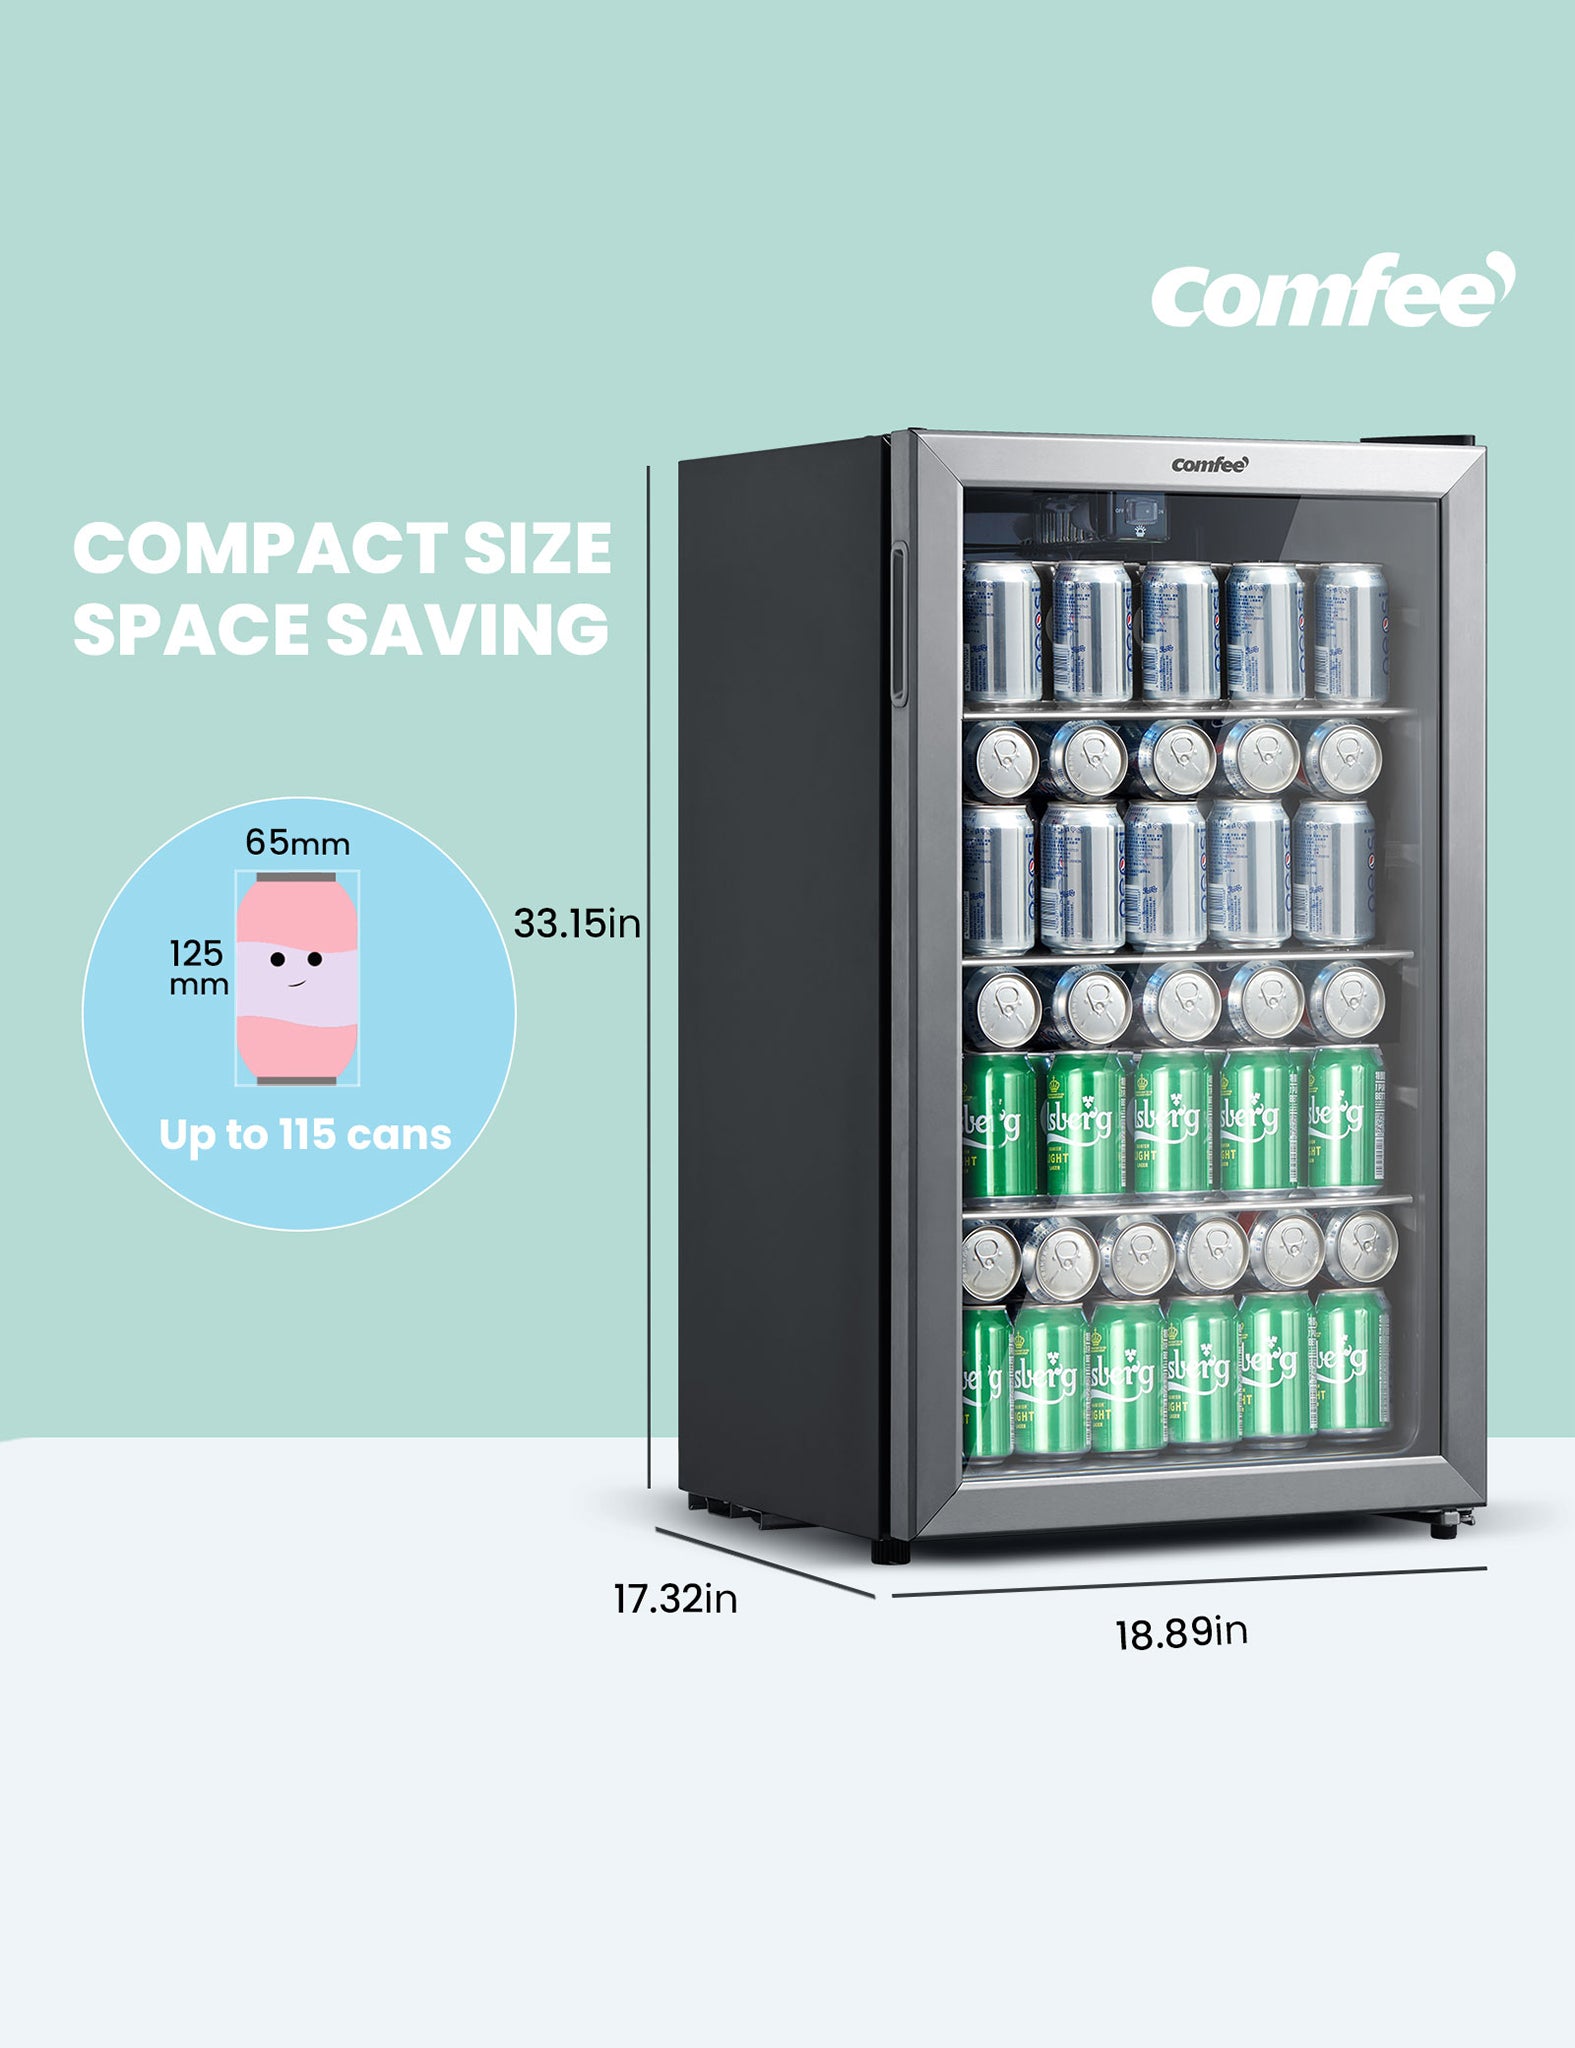 measurements of the comfee beverage cooler